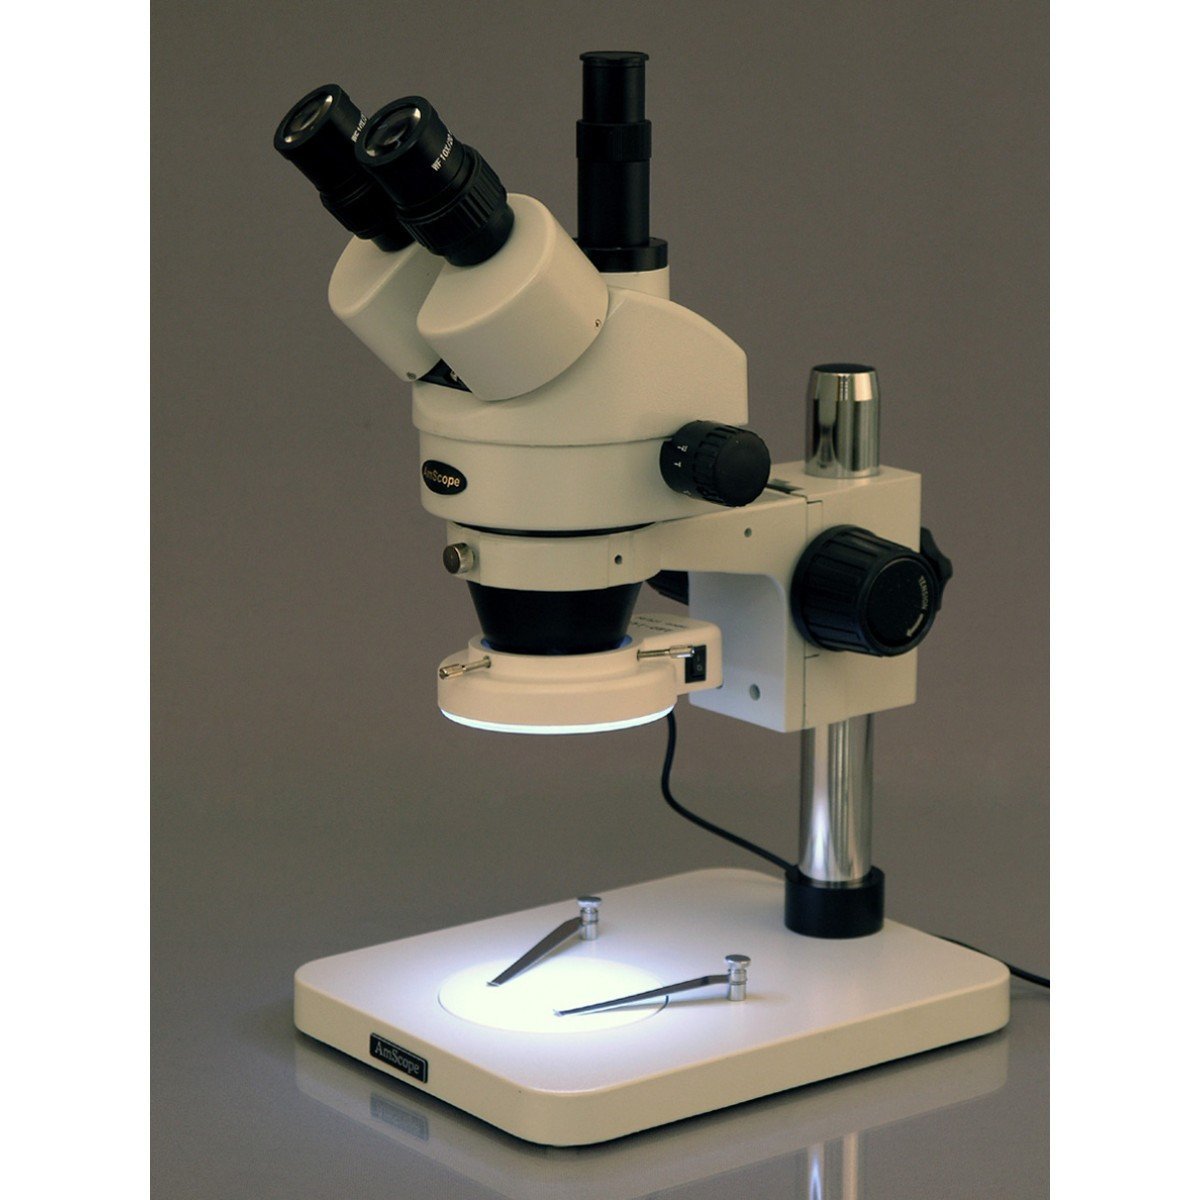 AmScope 3.5X-90X Surface Inspection 144-LED Zoom Stereo Microscope + 16MP USB3.0 Digital Camera